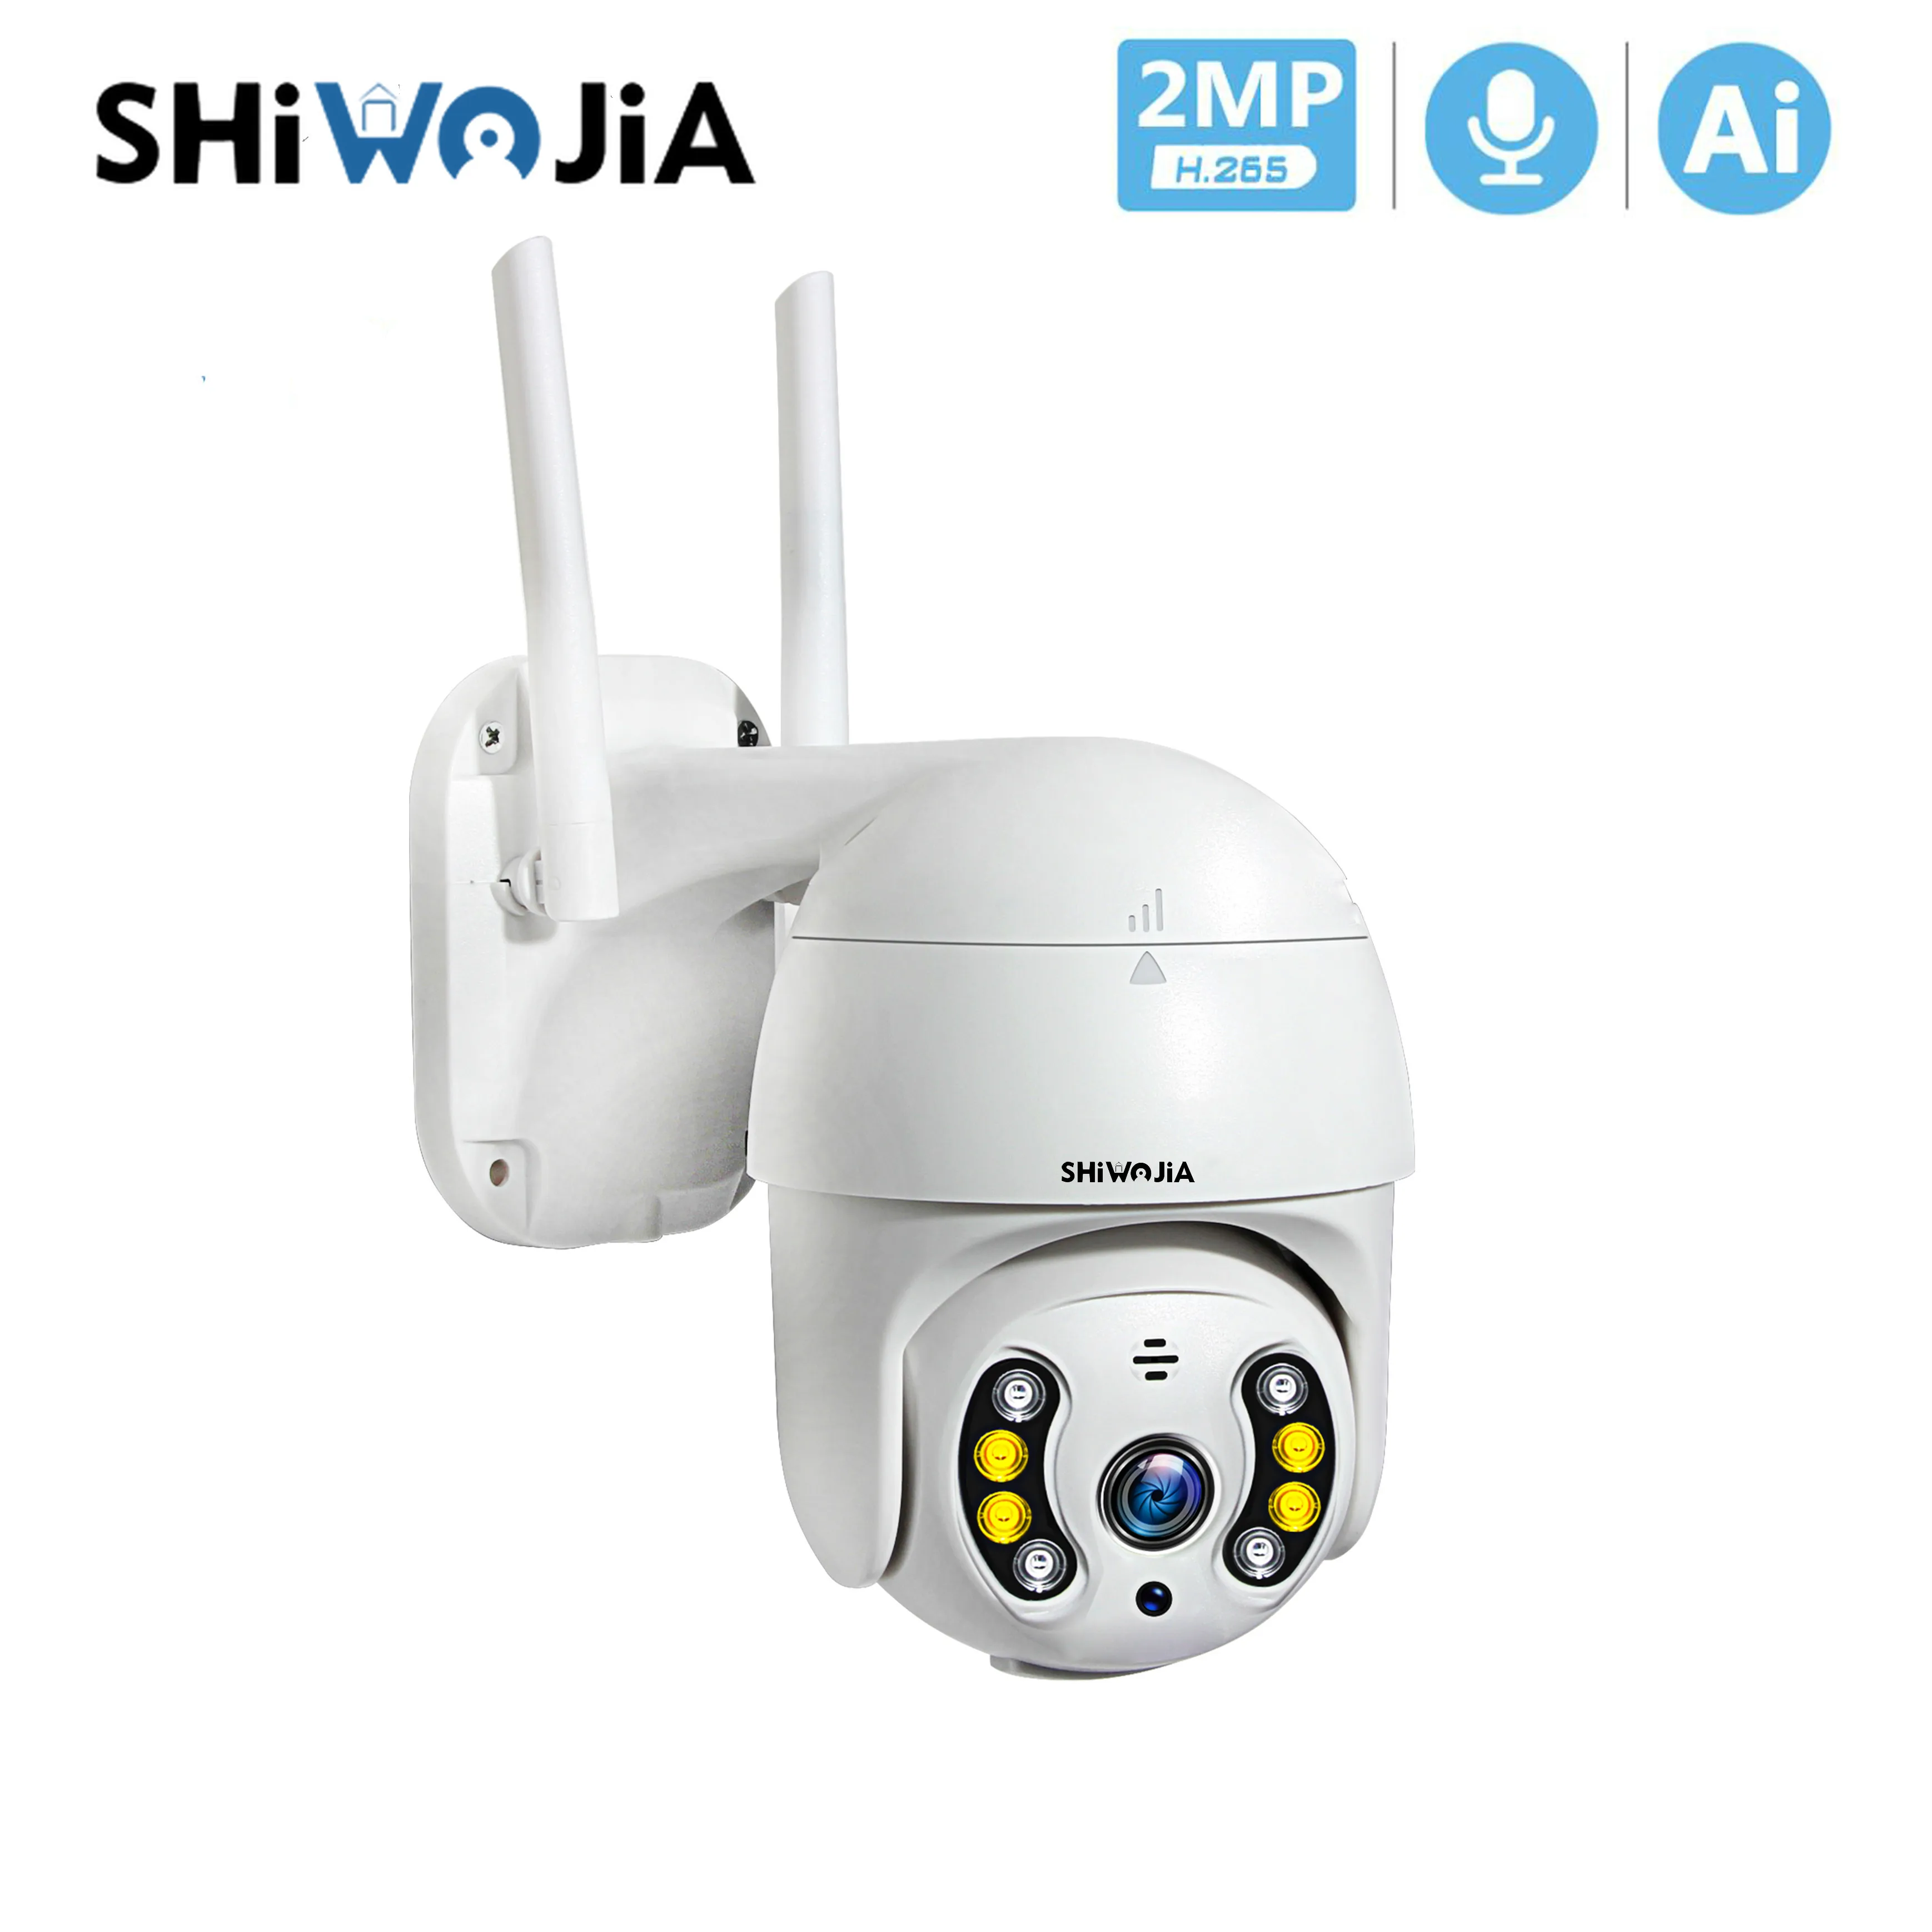 

SHIWOJIA 1080P PTZ Wireless IP Camera Home Outdoor WiFi Security CCTV Camera Auto Tracking Waterproof Surveillance Human Detect